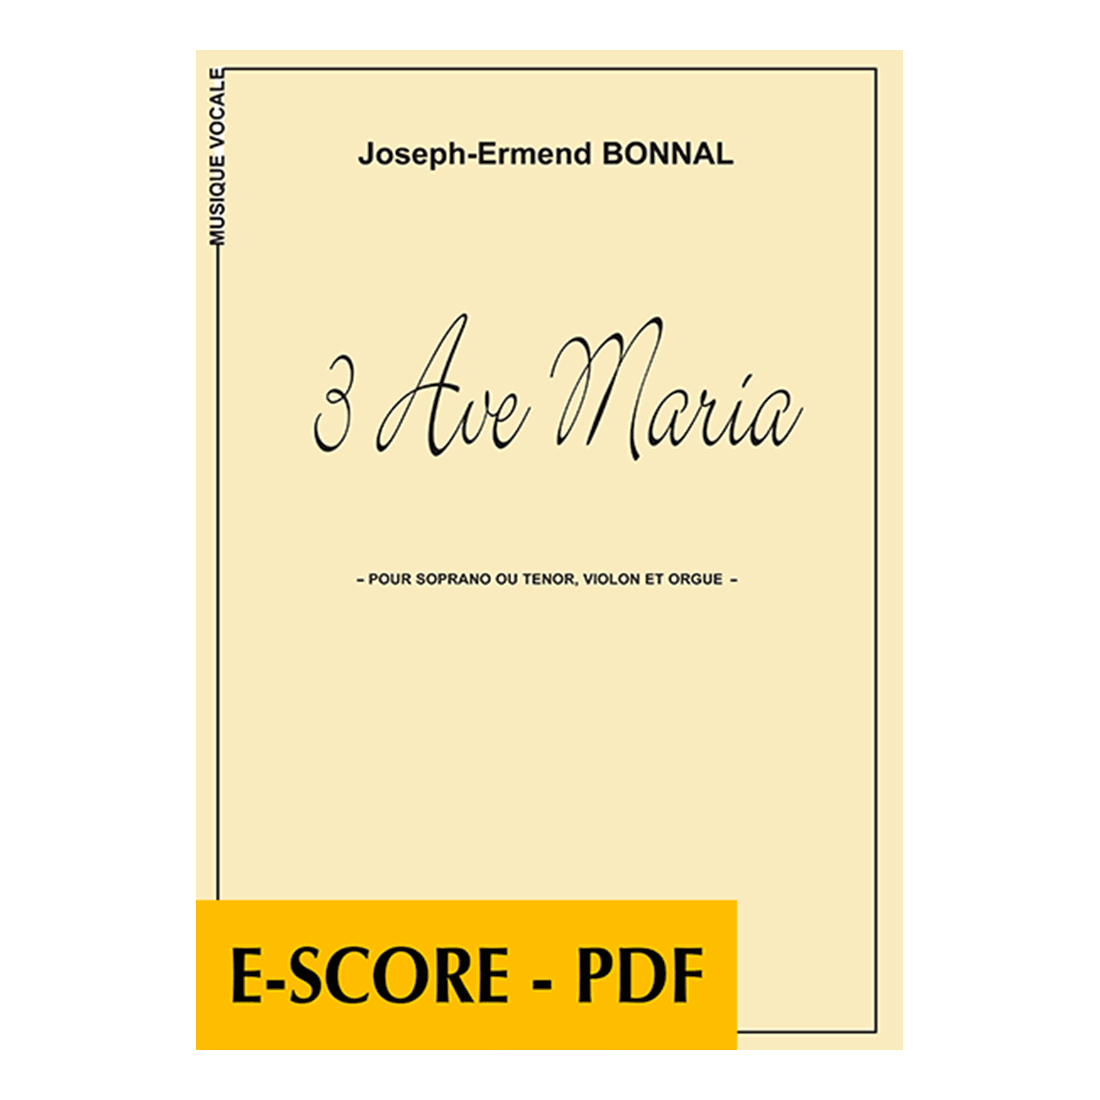 3 Ave Maria pour soprano ou ténor, violon et orgue - E-score PDF